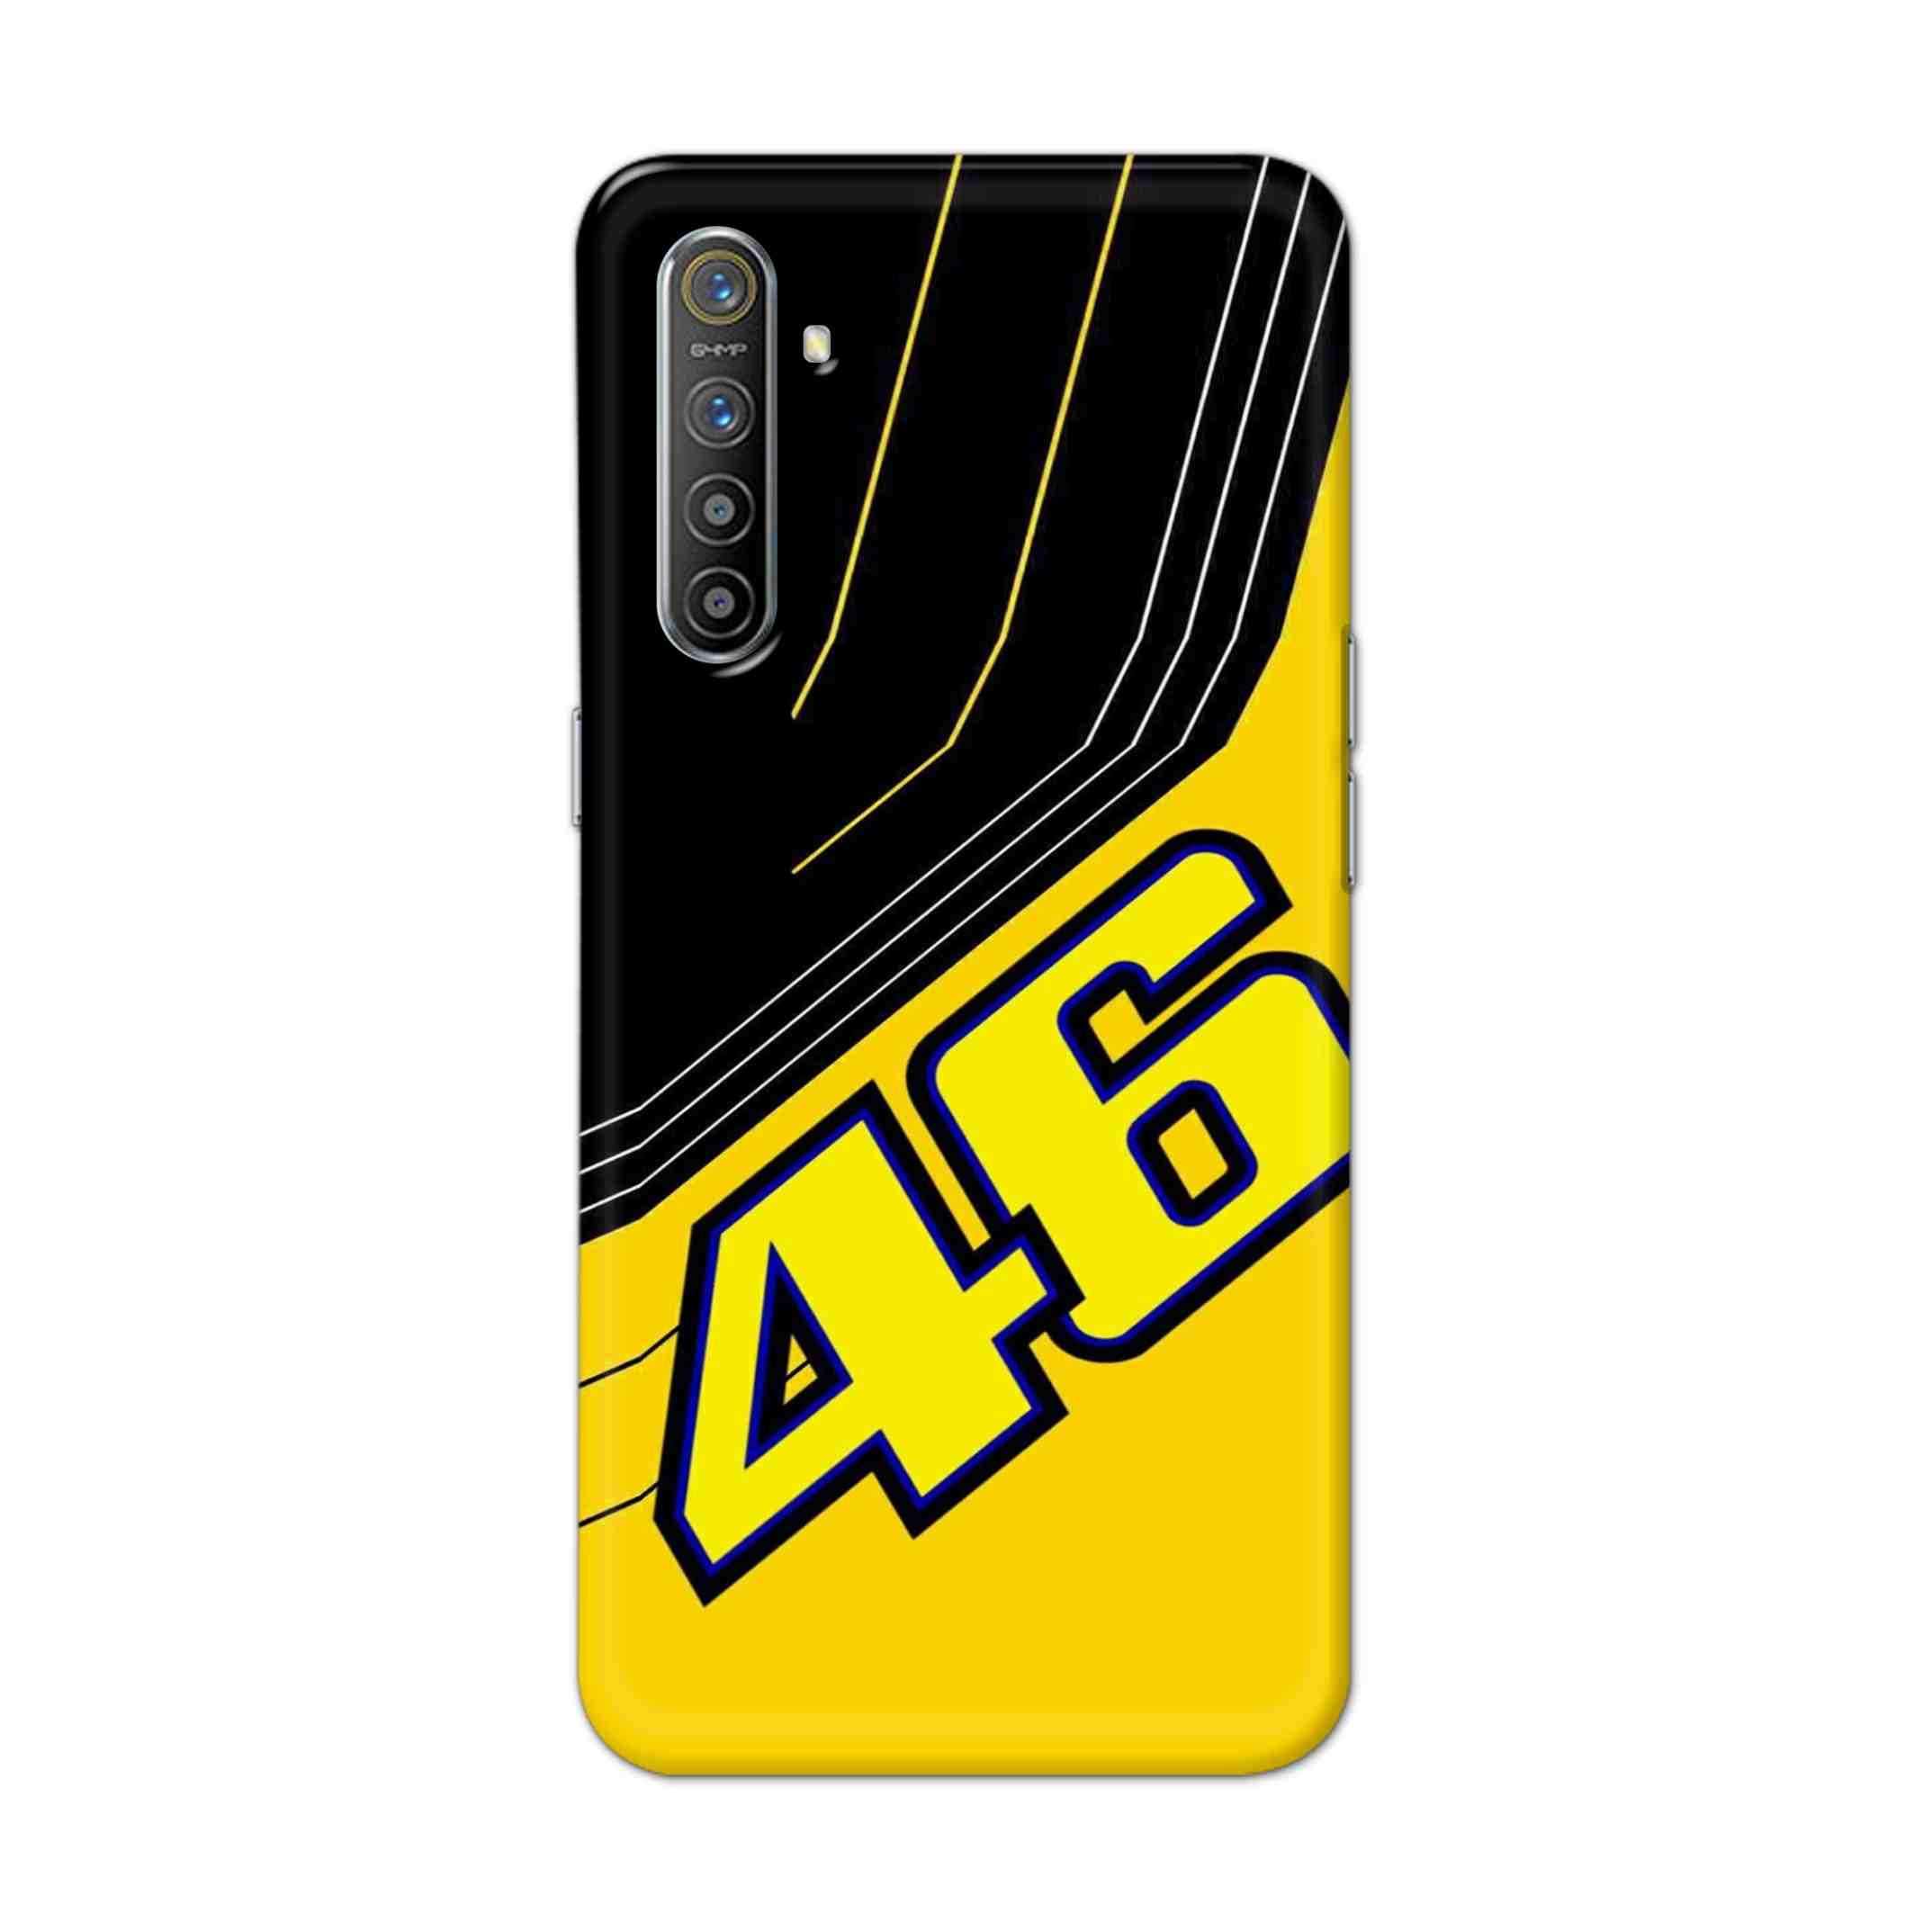 Buy 46 Hard Back Mobile Phone Case Cover For Oppo Realme XT Online